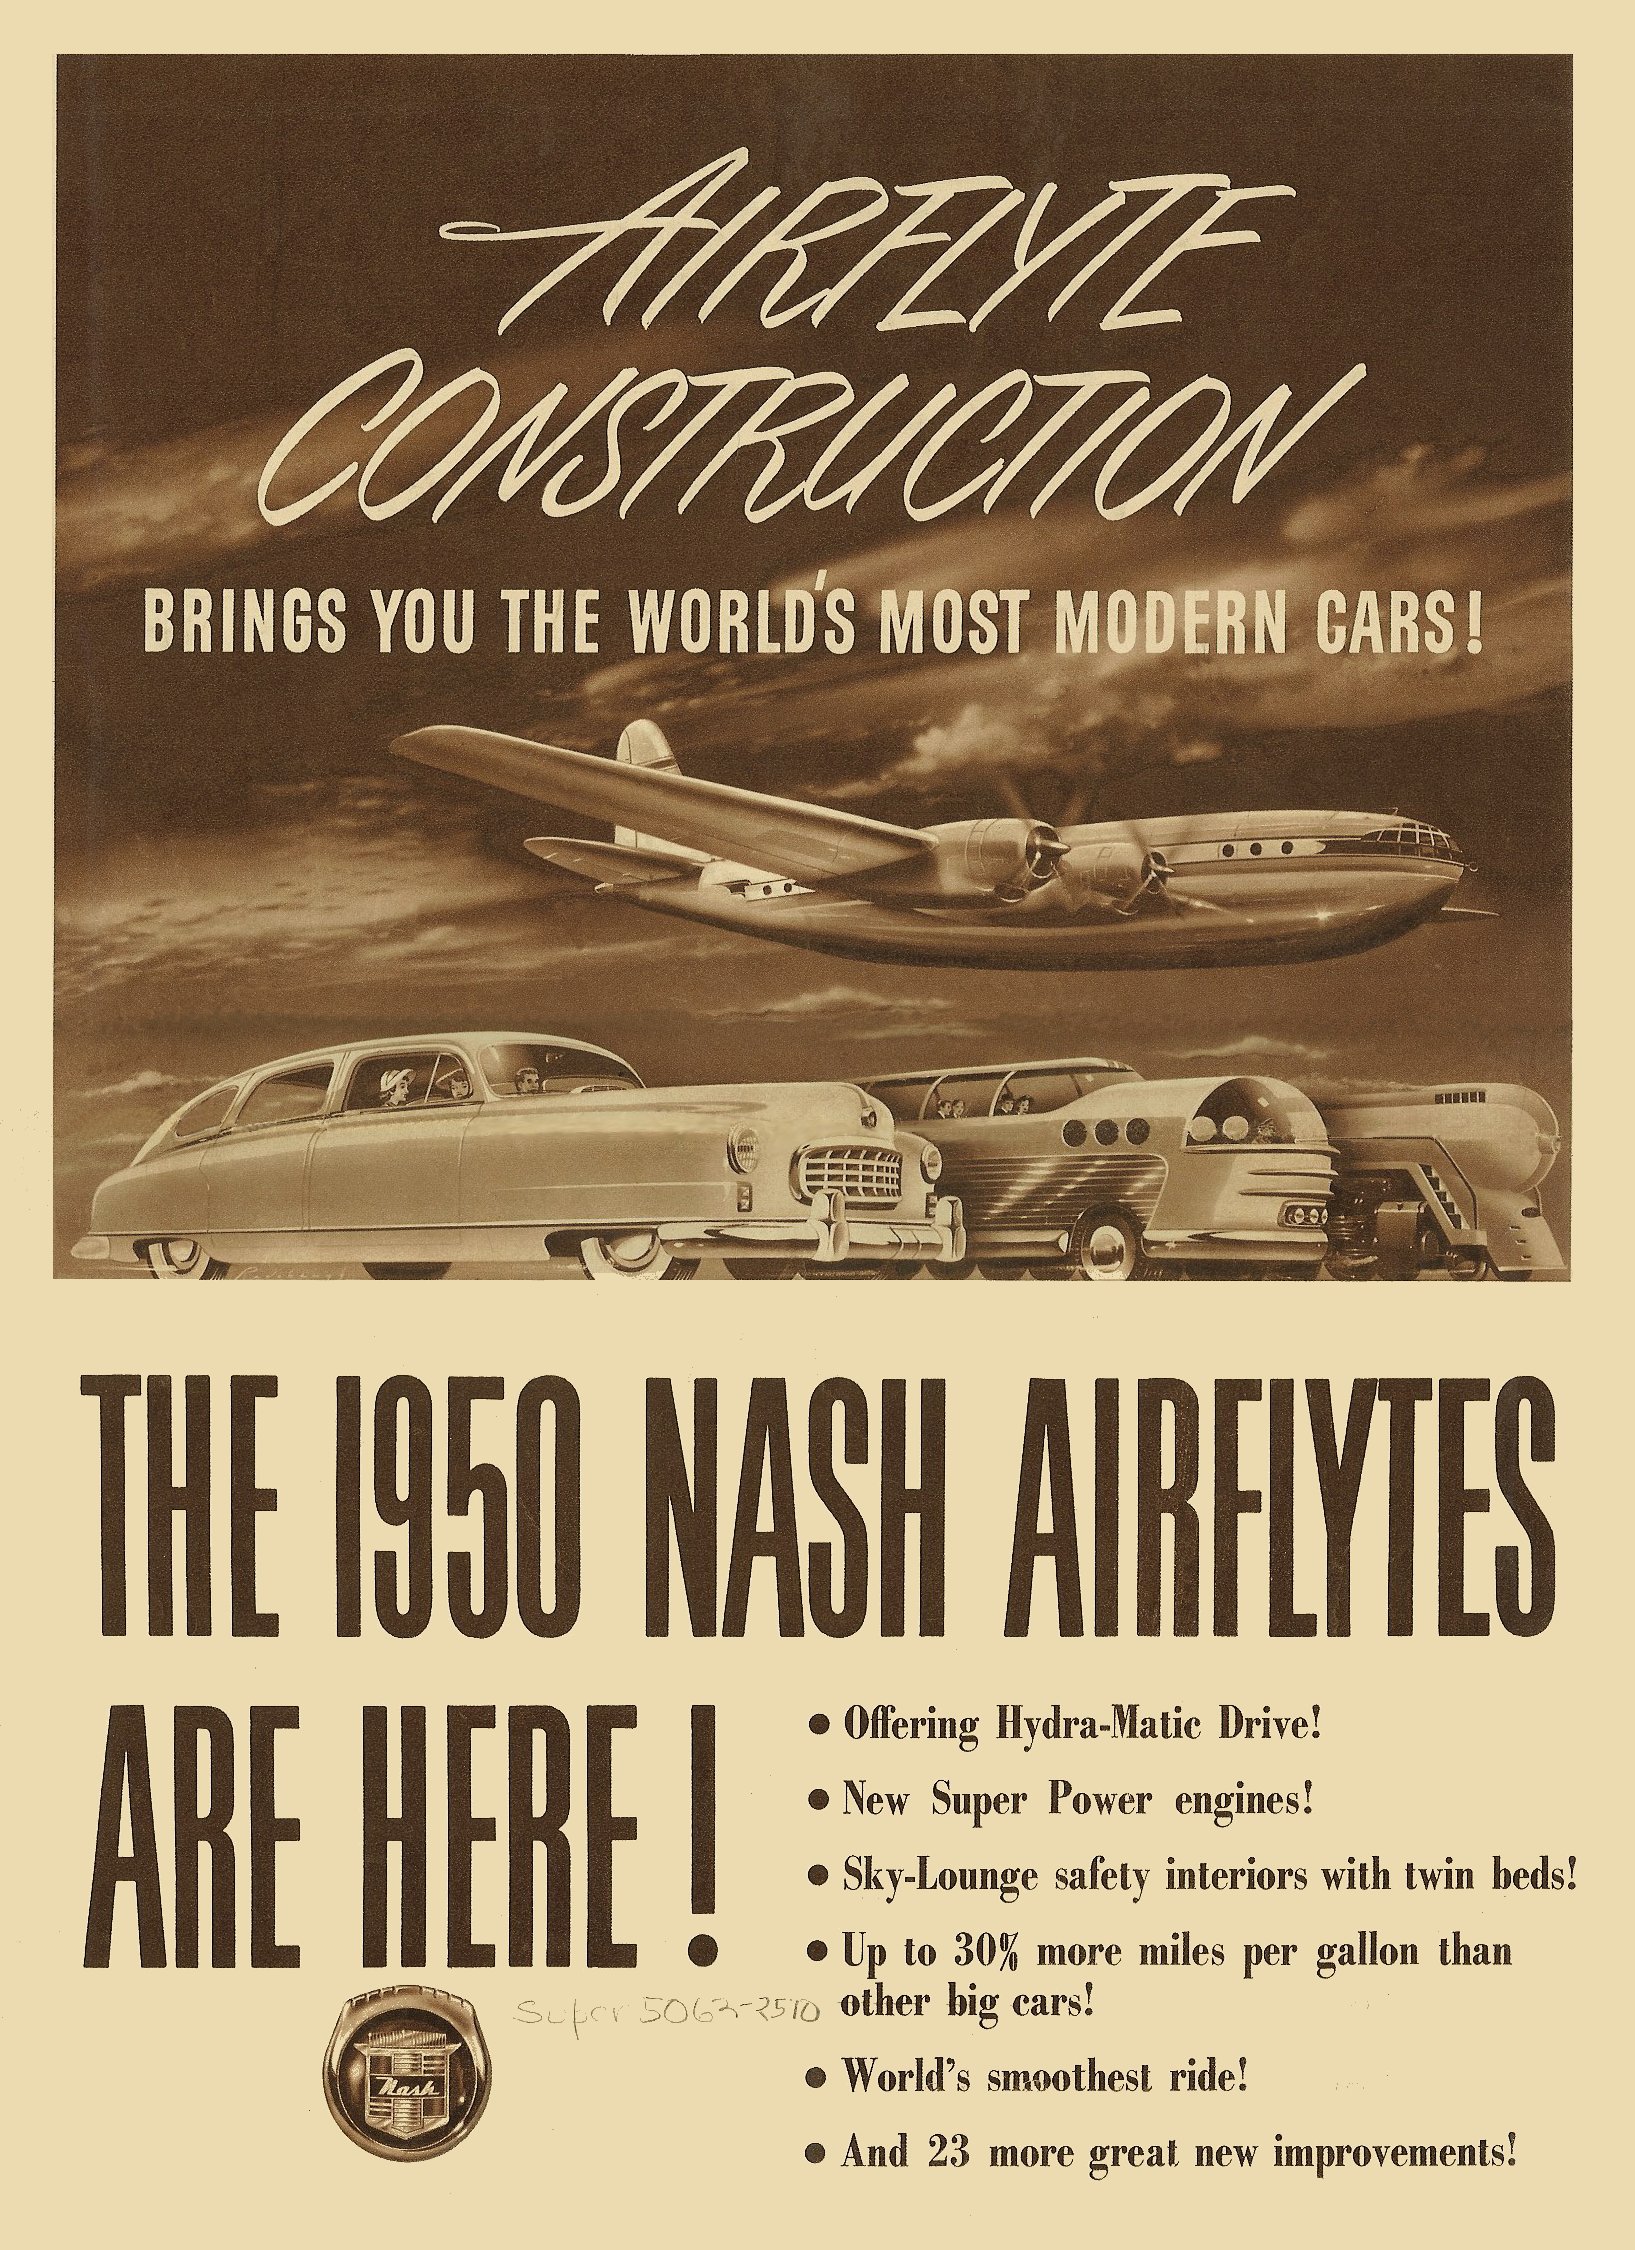 1950 Nash Airflyte Foldout-01